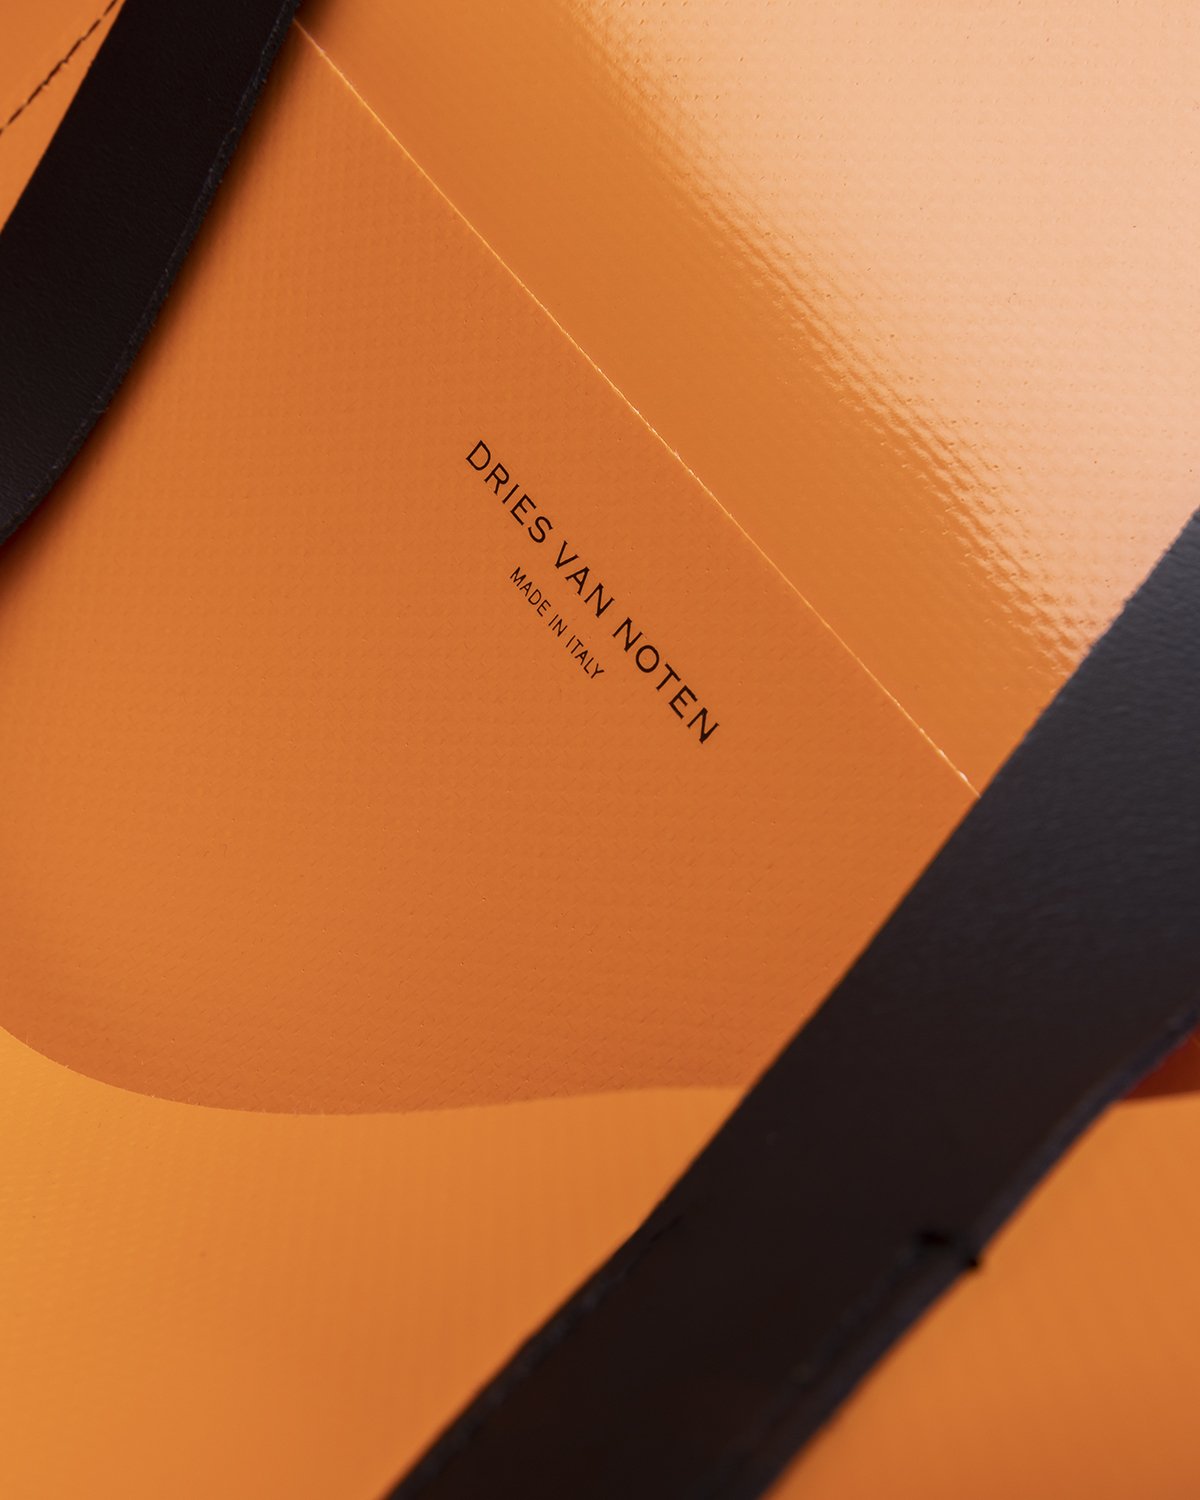 Dries van Noten - Tote Bag Orange - Accessories - Orange - Image 3